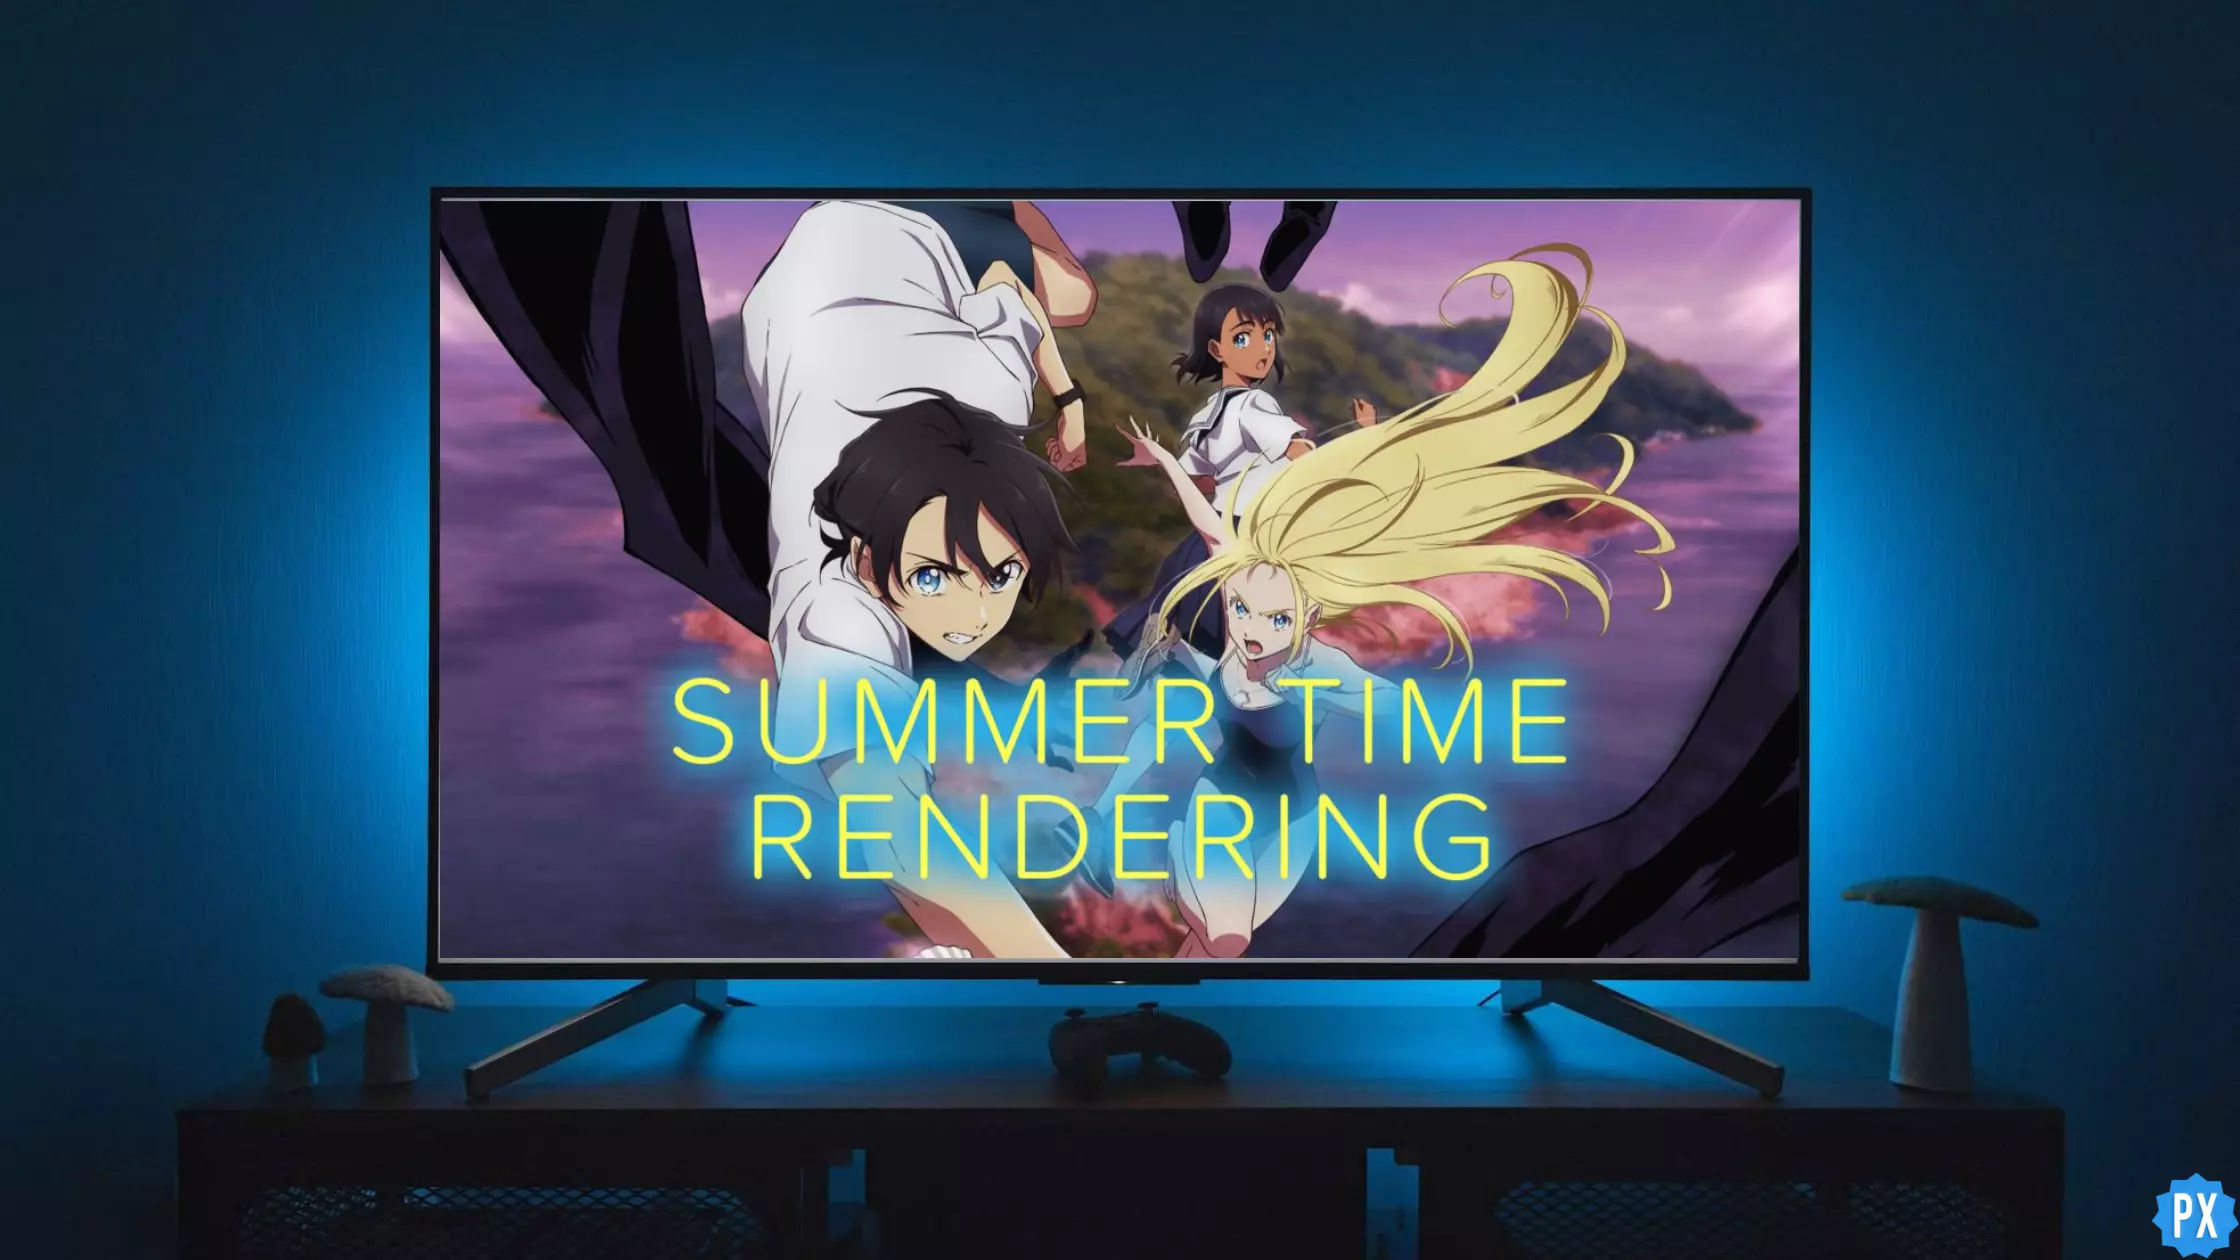 Where to Watch Summer Time Rendering: Disney+, Crunchyroll or Hulu